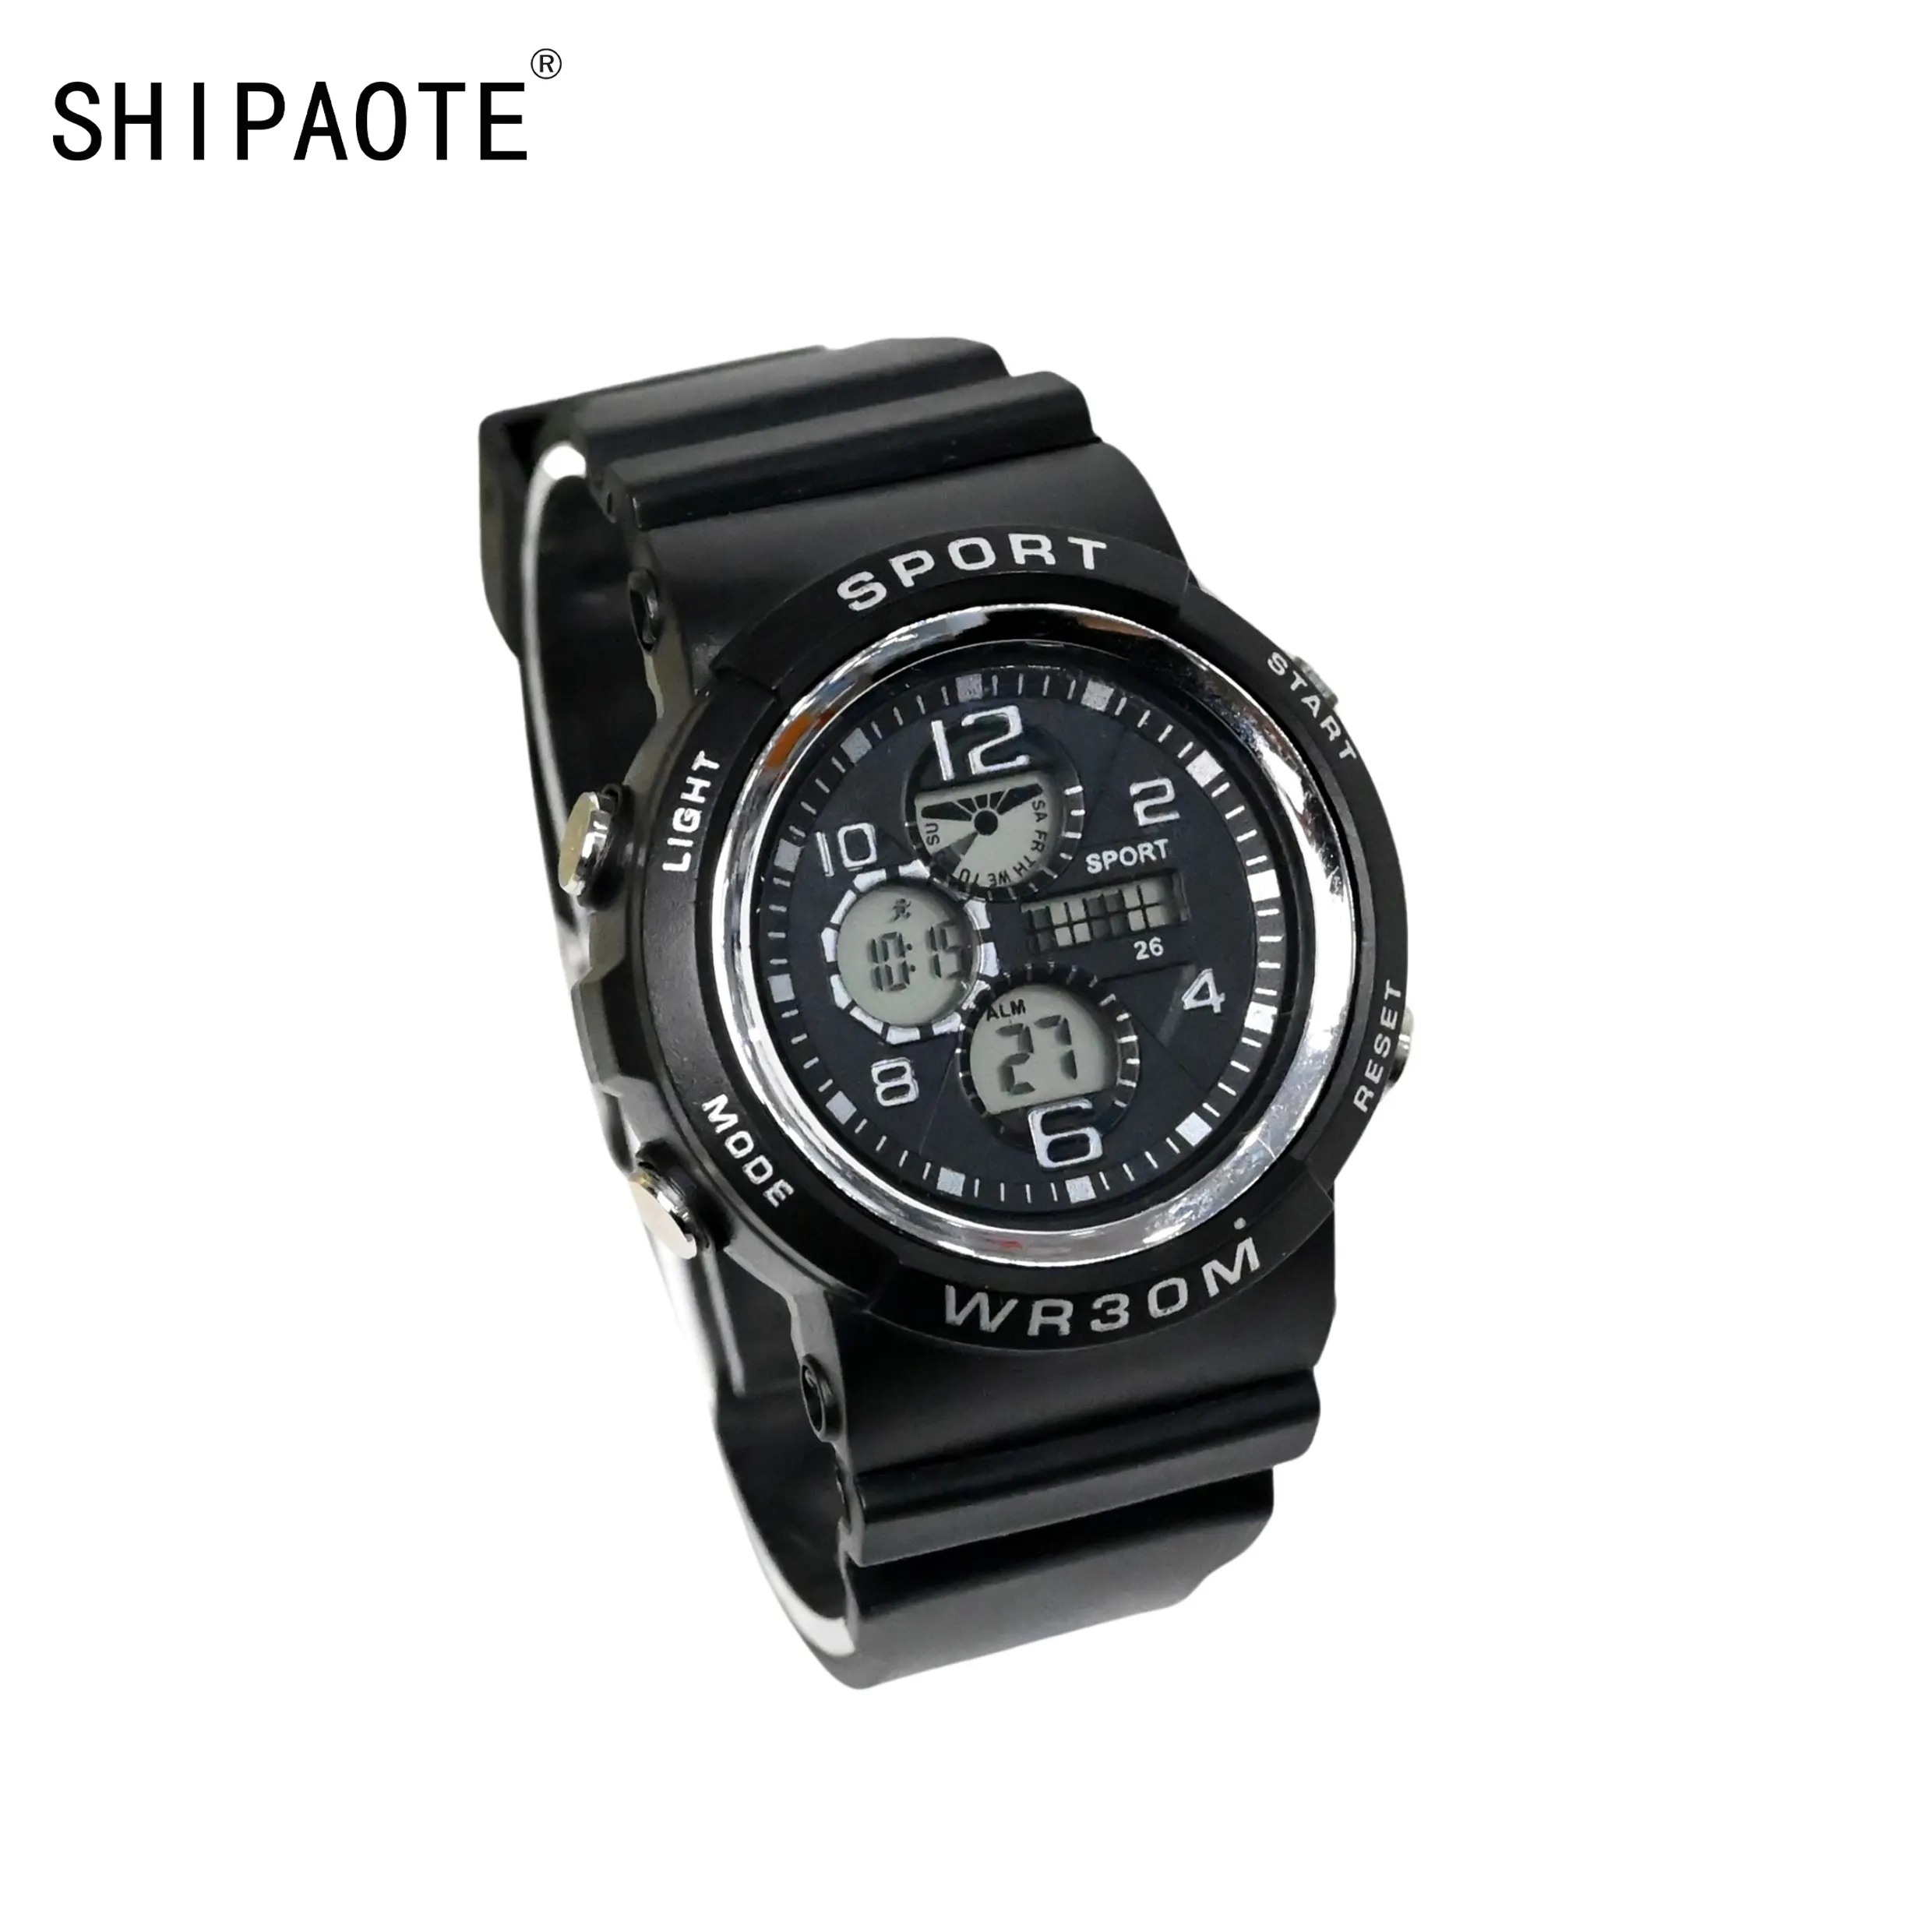 Shibaote jam tangan Digital anak multifungsi, arloji Digital dengan gelang PVC untuk anak laki-laki dan perempuan 312